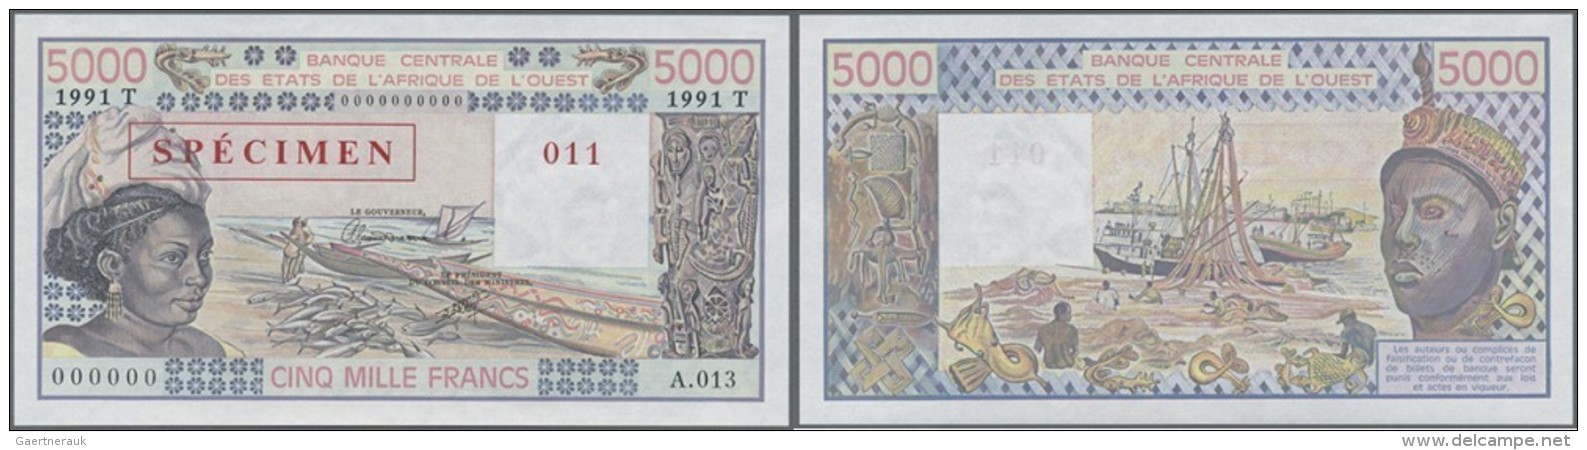 Togo: 5000 Francs 1992 Specimen P. 808Ts (W.A.S.) In Condition: UNC. - Togo